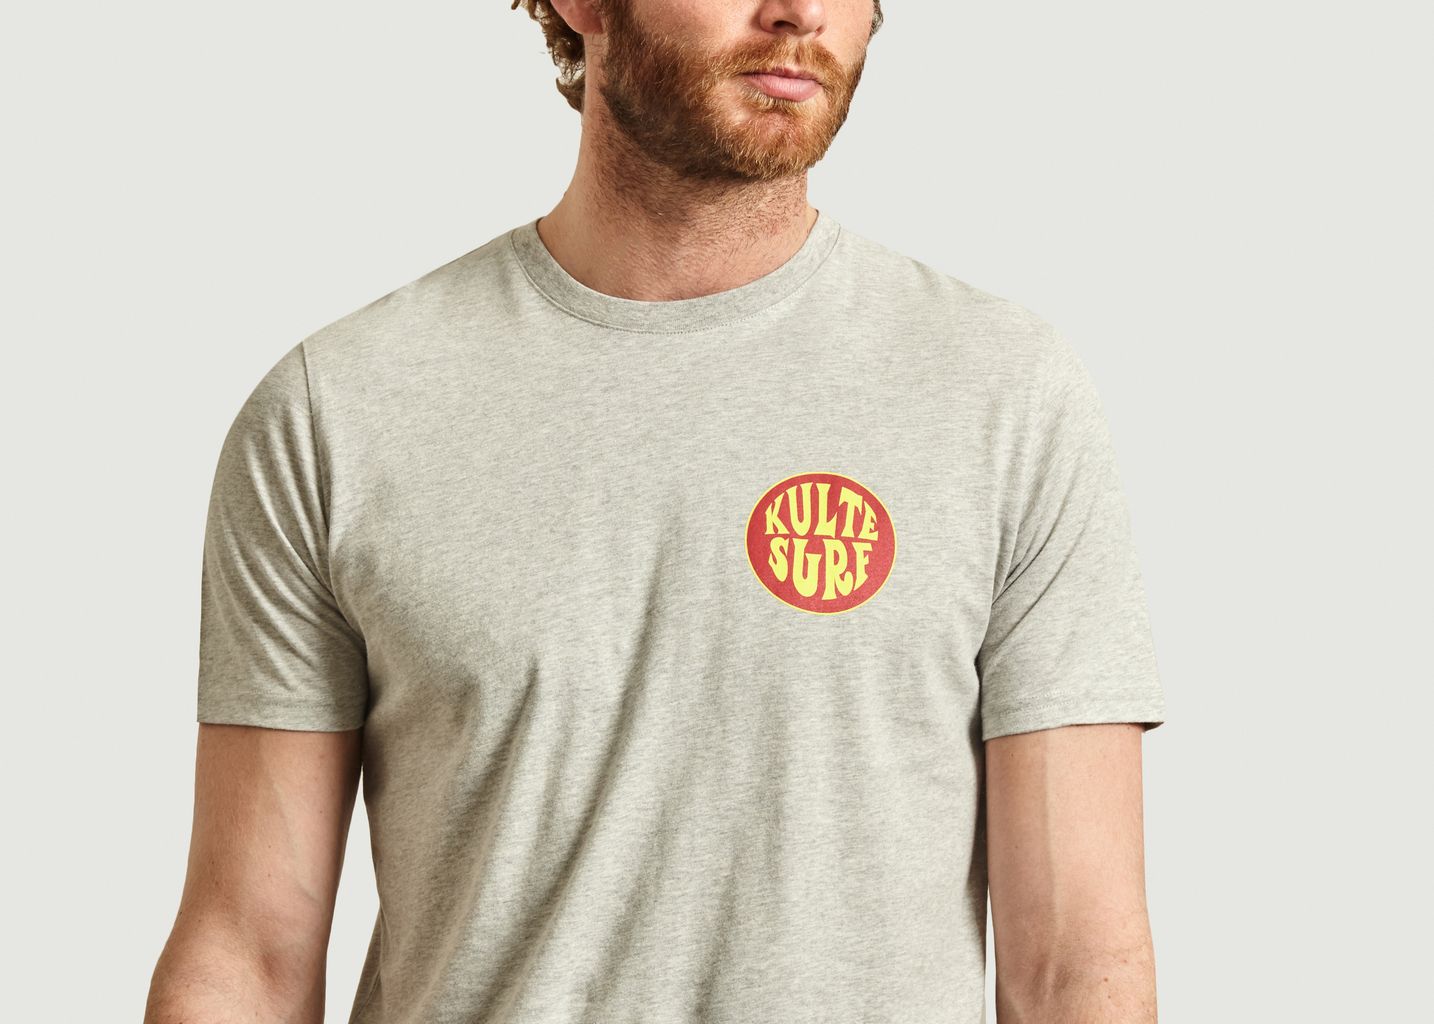 Kulte Surf t-shirt - Kulte